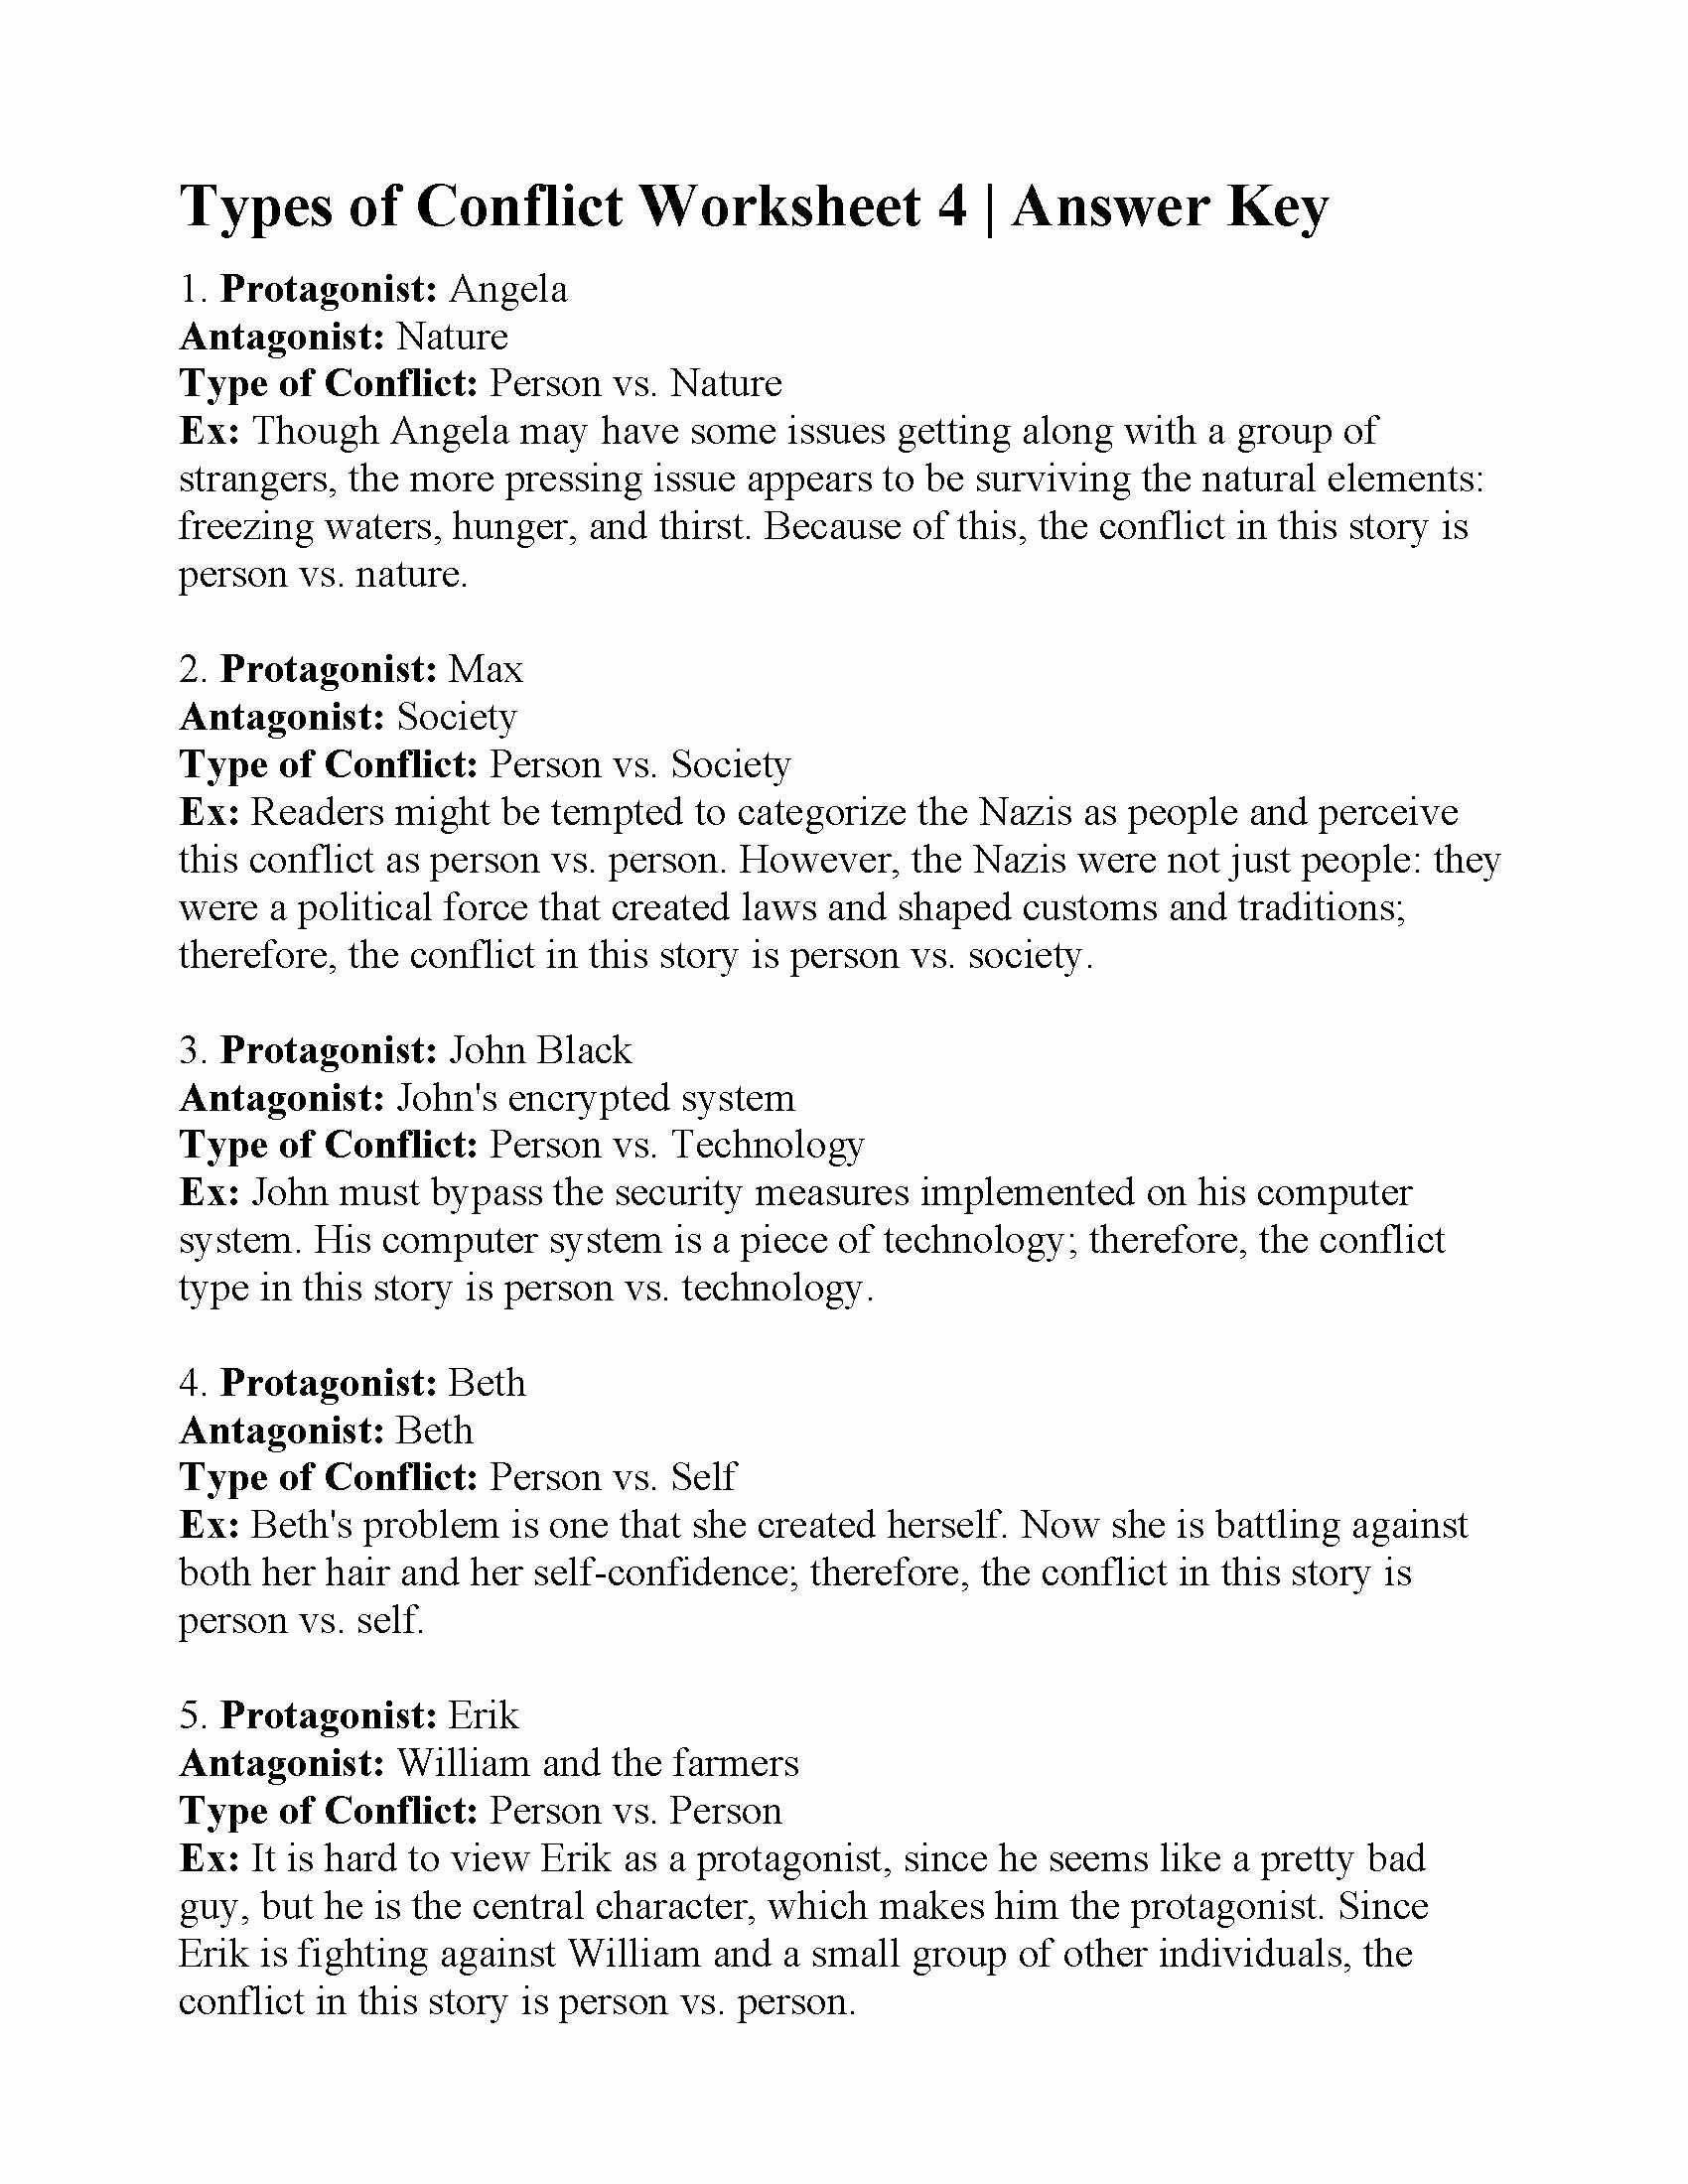 Protagonist and Antagonist Worksheet Fresh Types Of Conflict Worksheet 4